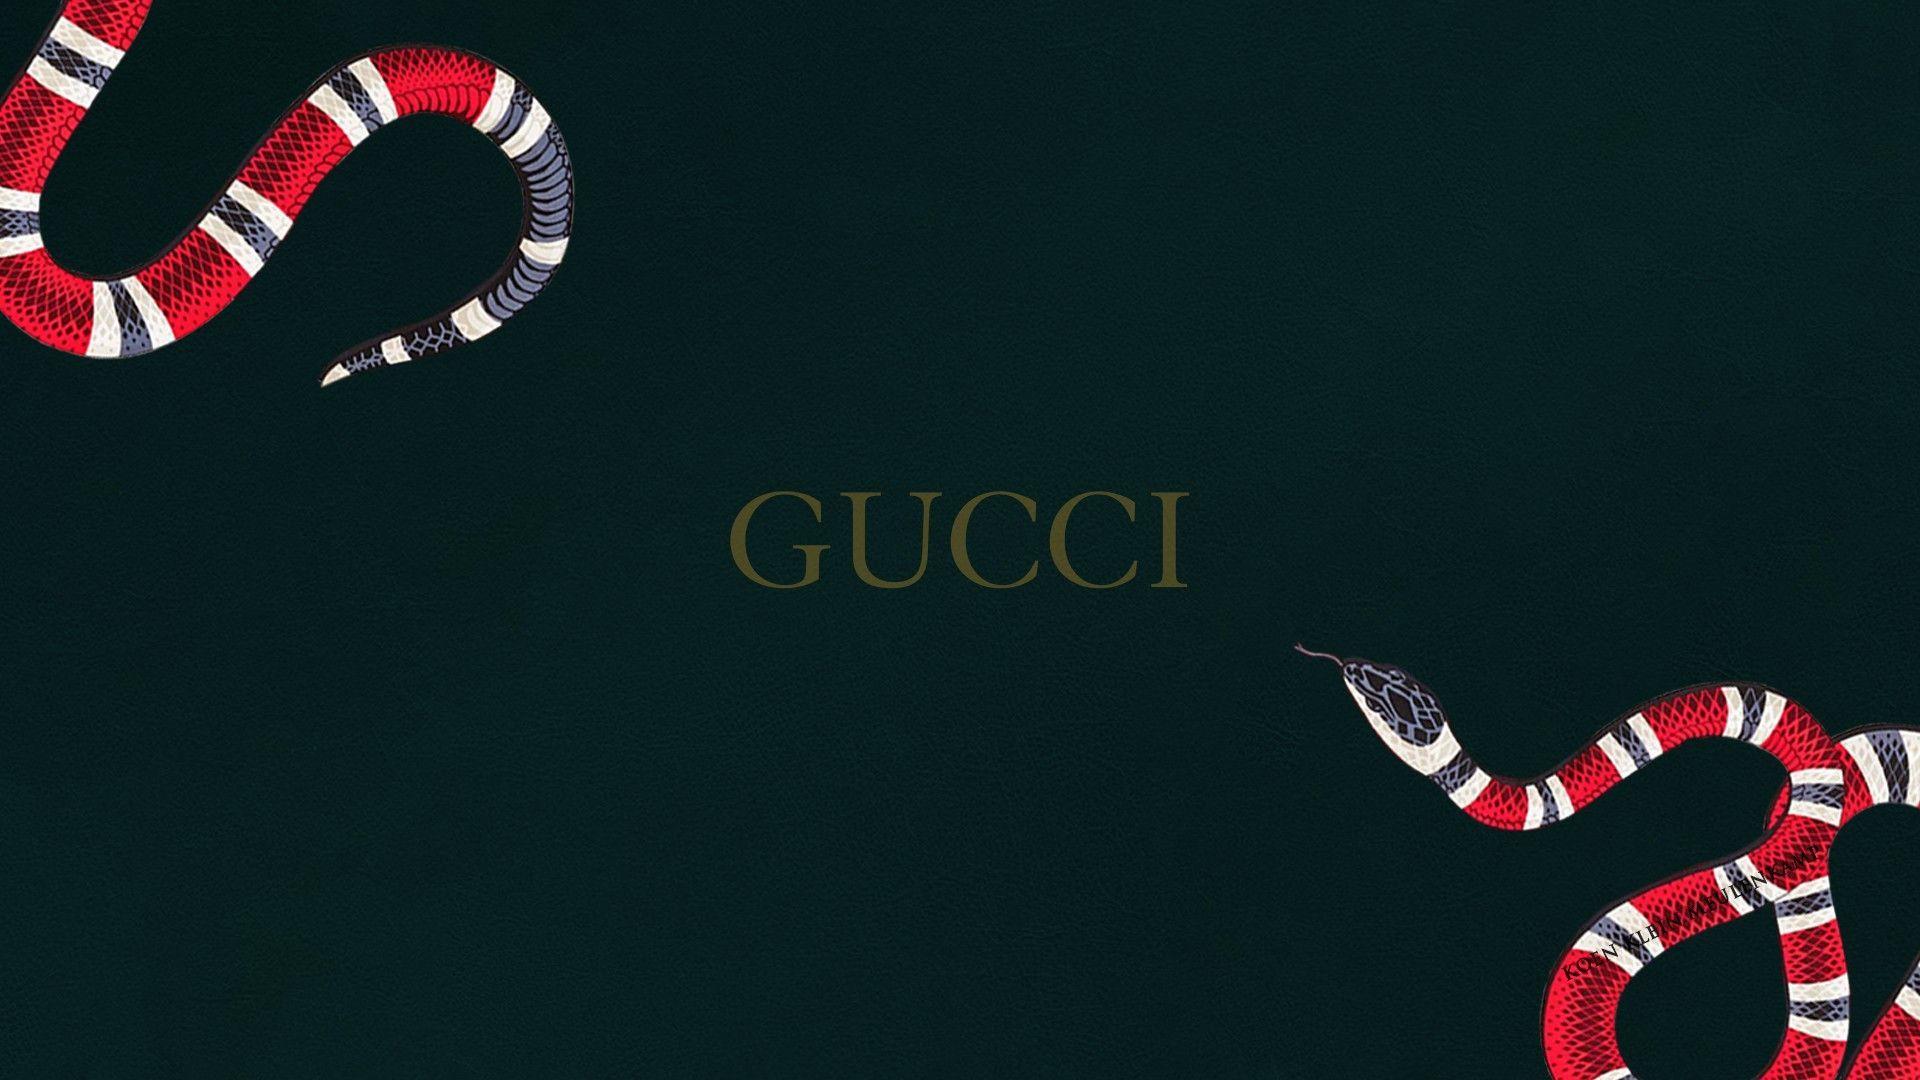 Gucci Desktop Wallpapers - Top Free